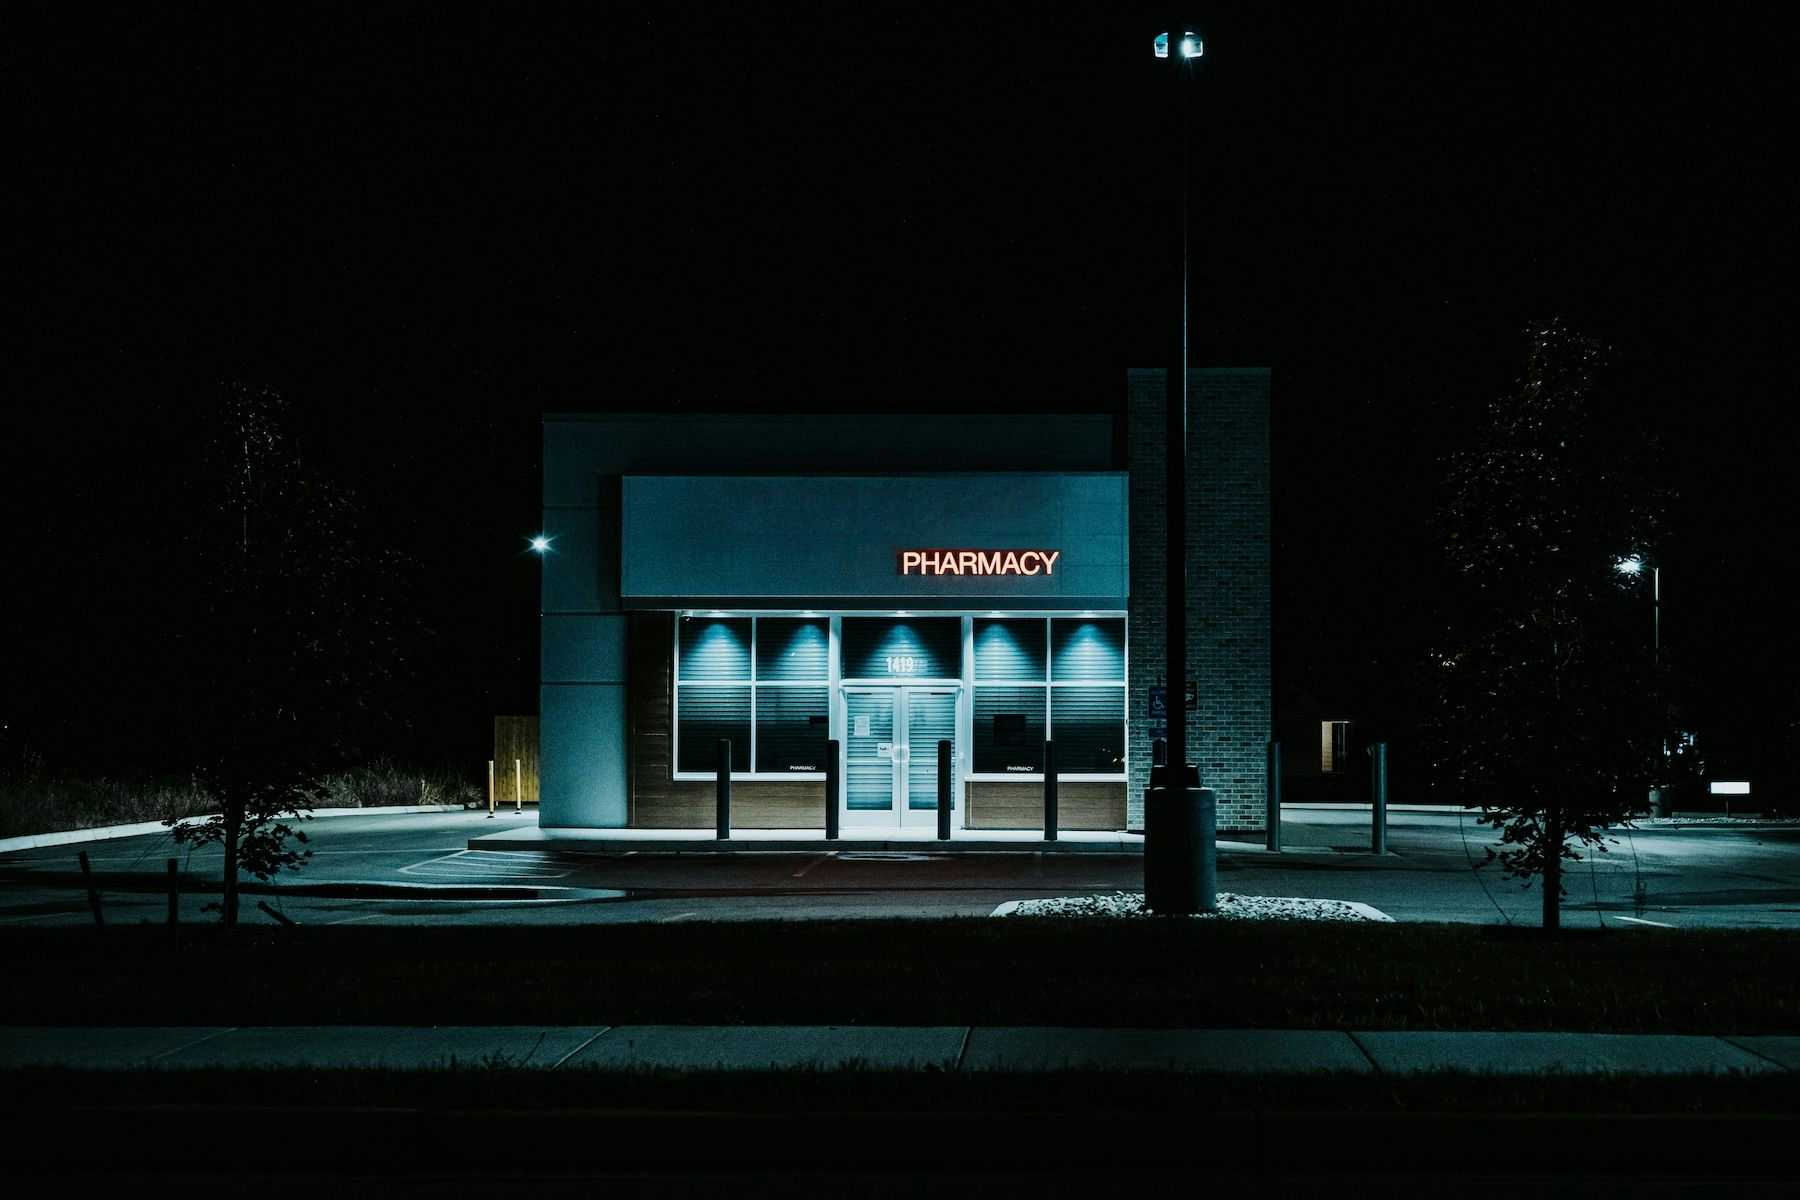 Retail pharmacy at night